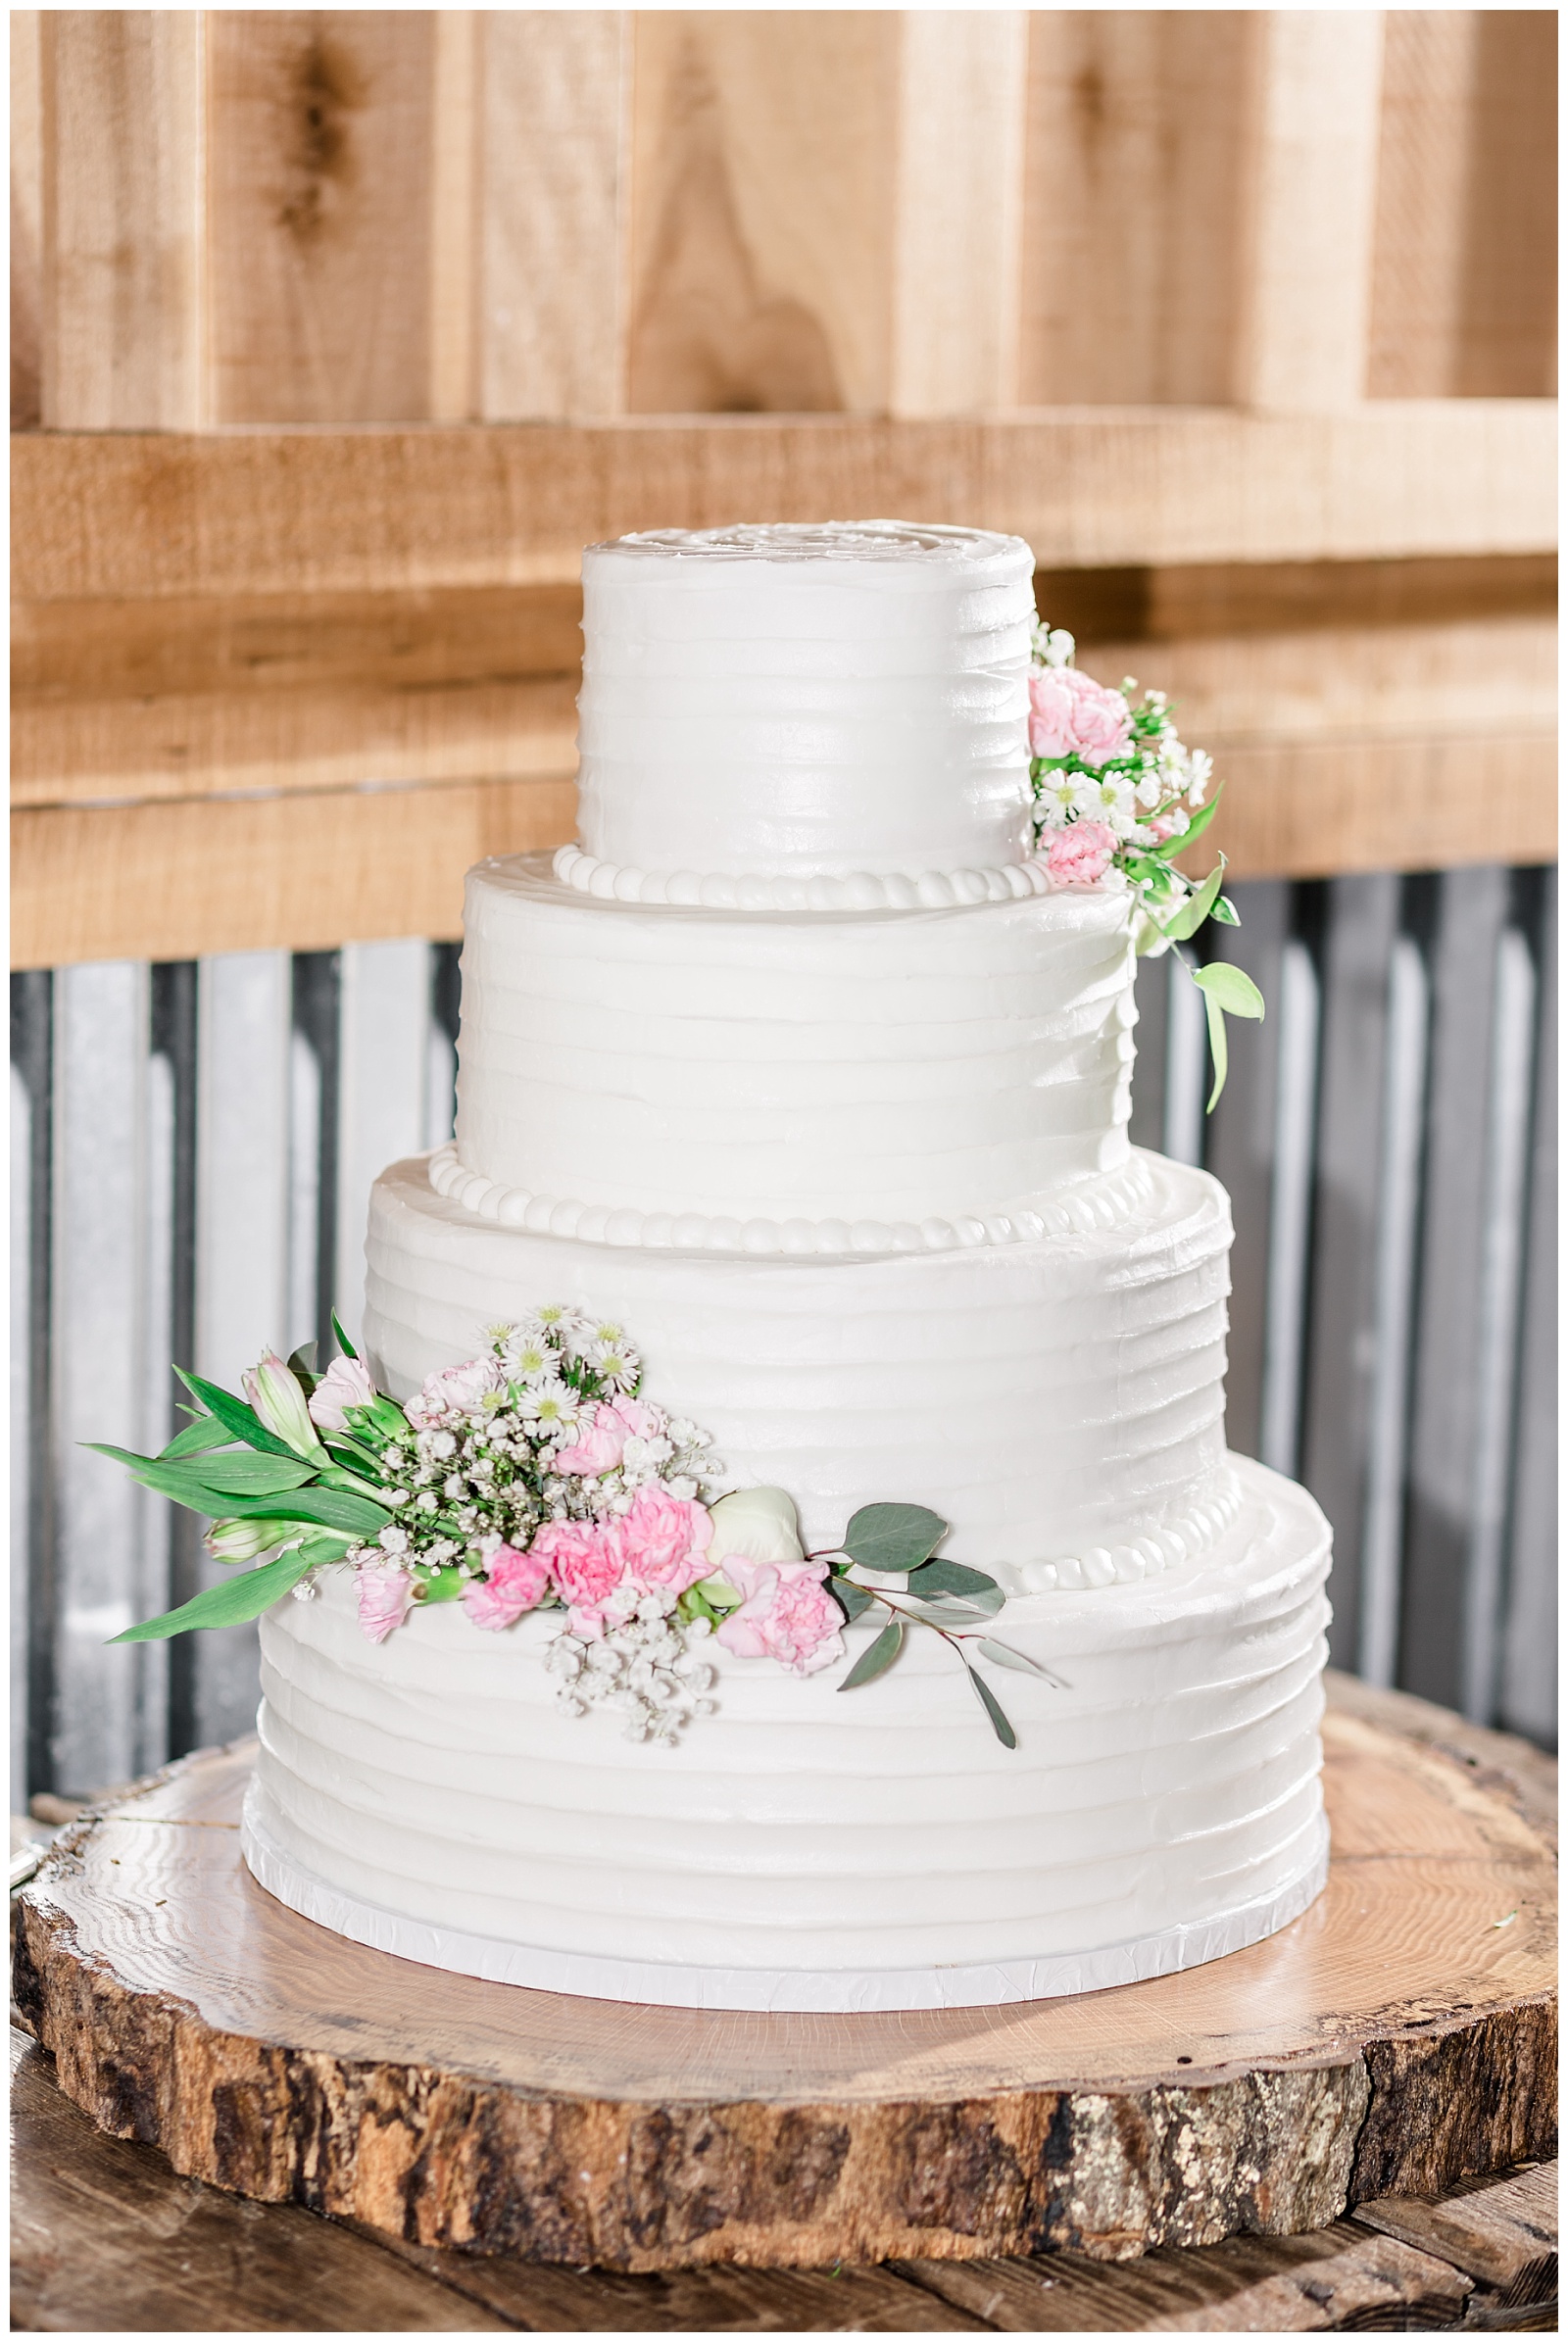 white wedding cake with pink floral design at rustic alabama barn wedding